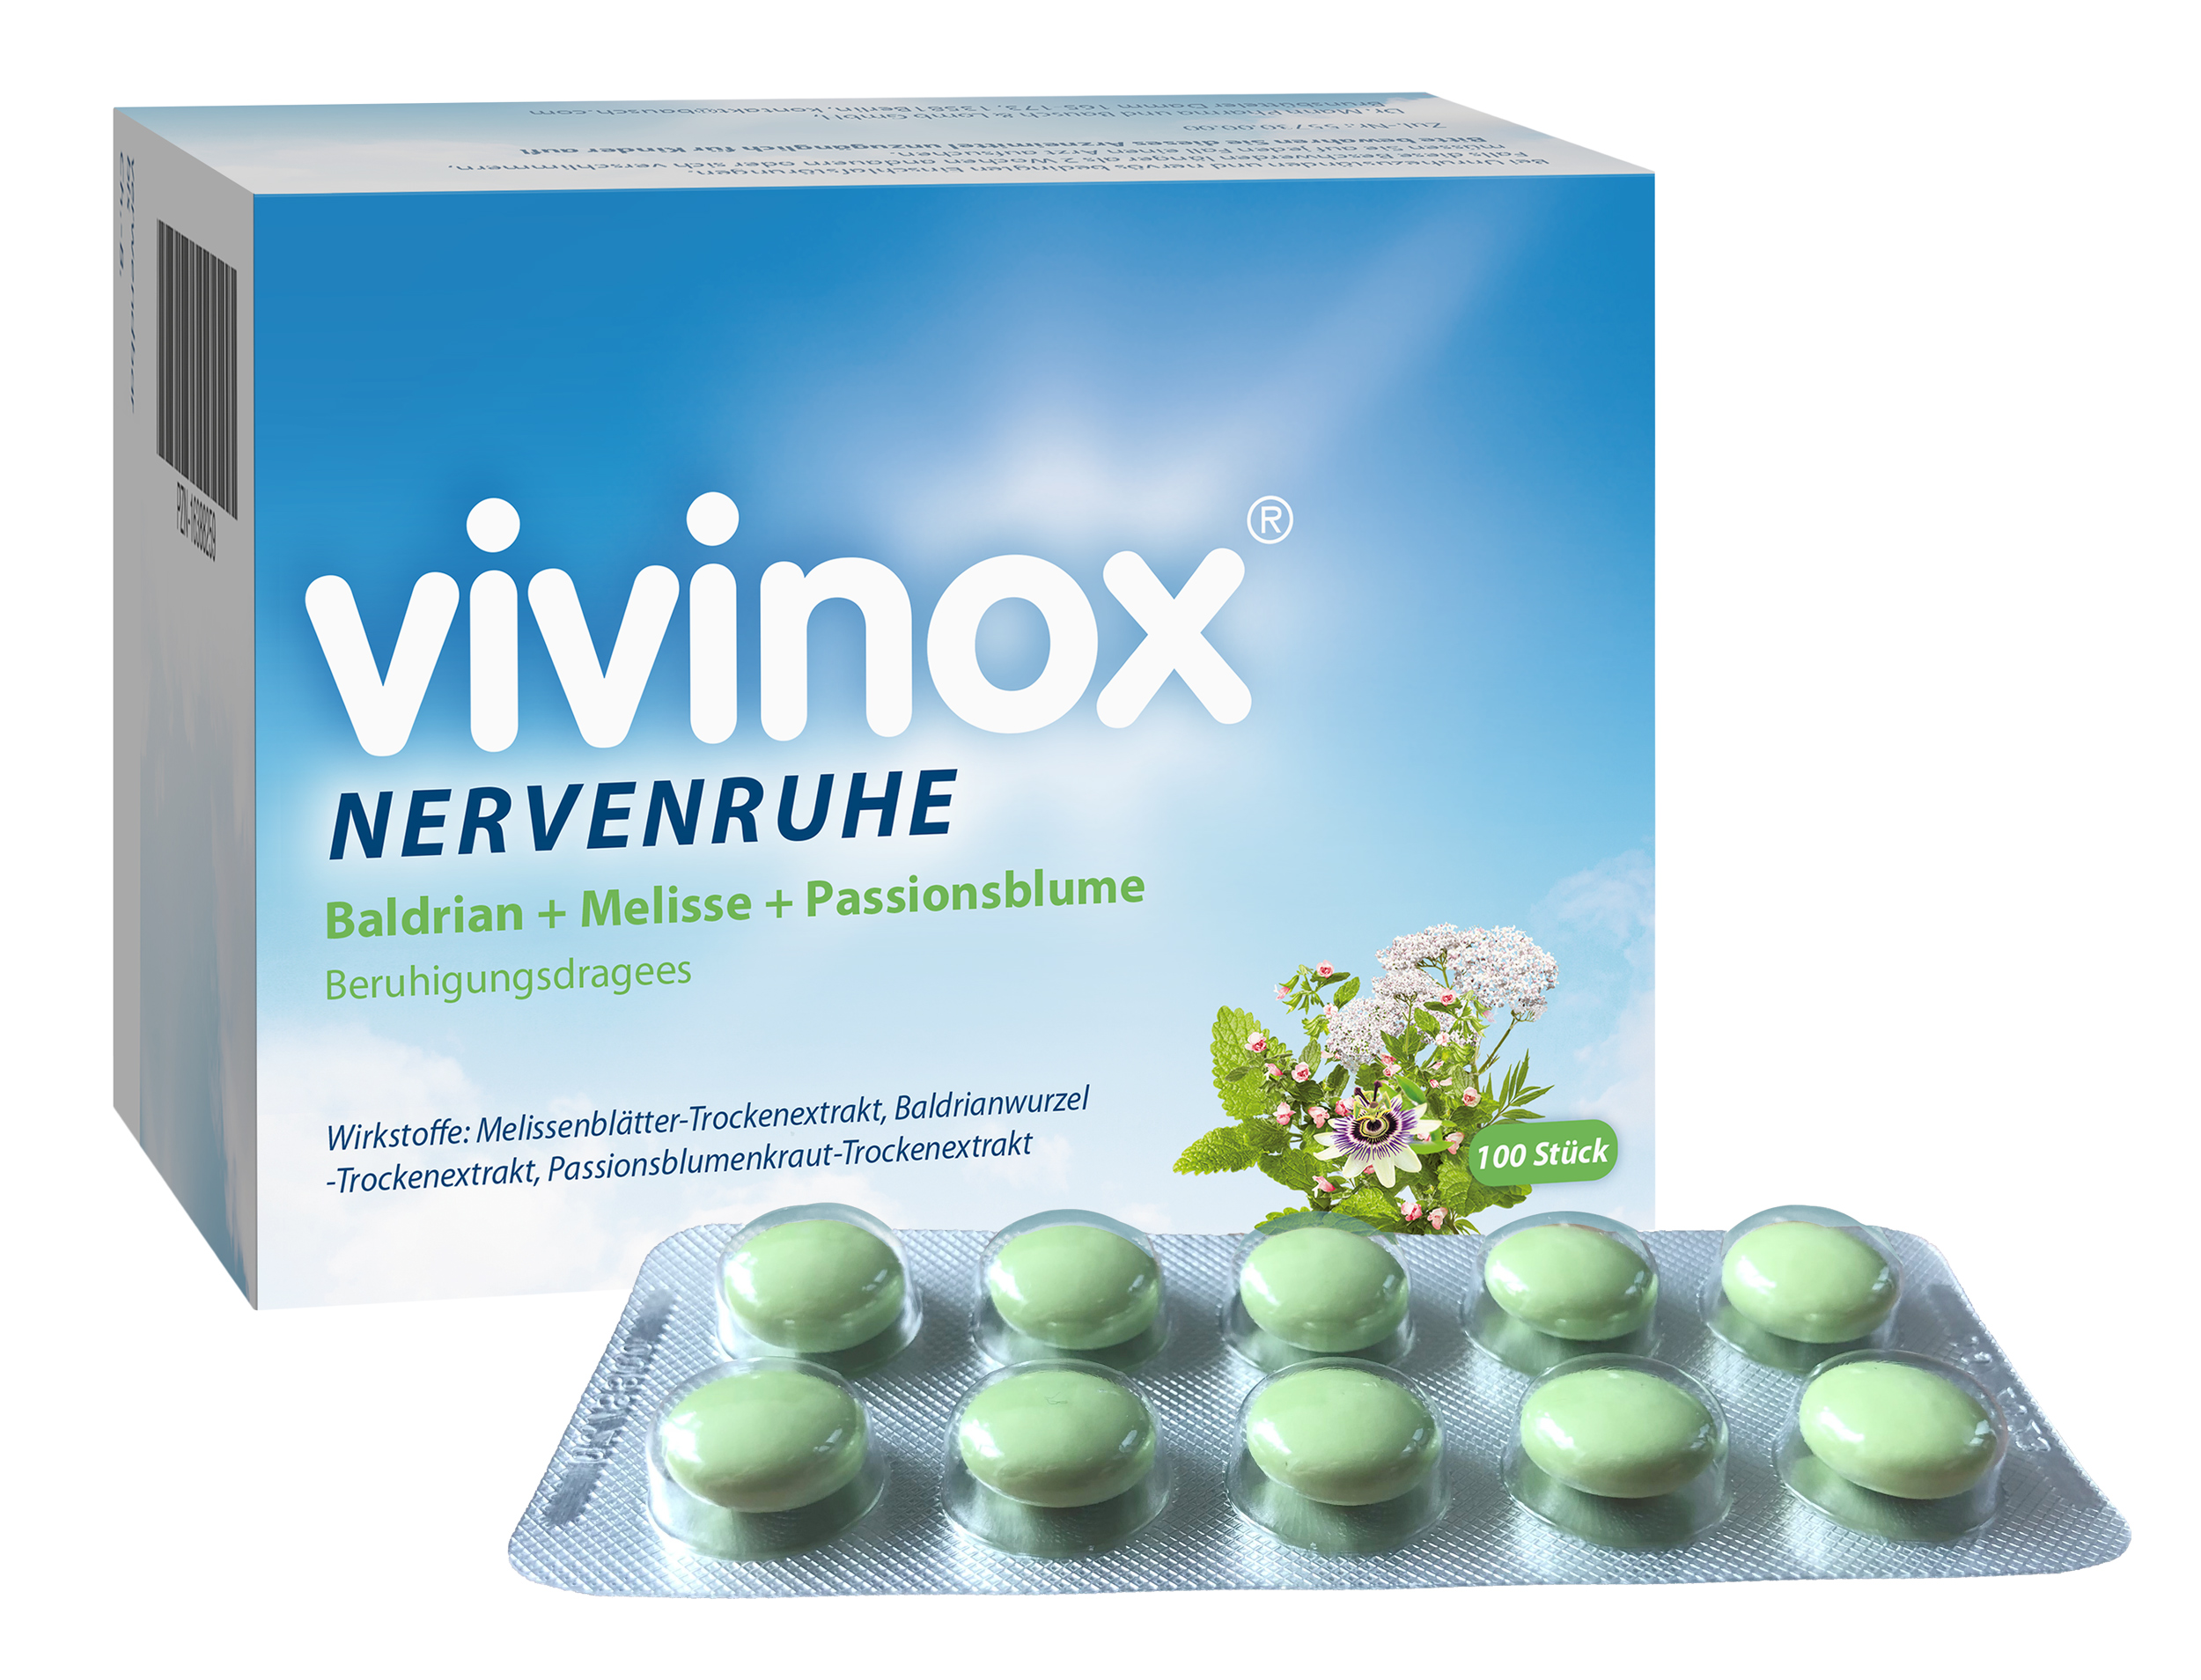 VIVINOX® NERVENRUHE BALDRIAN + MELISSE + PASSIONSBLUME BERUHIGUNGSDRAGEES